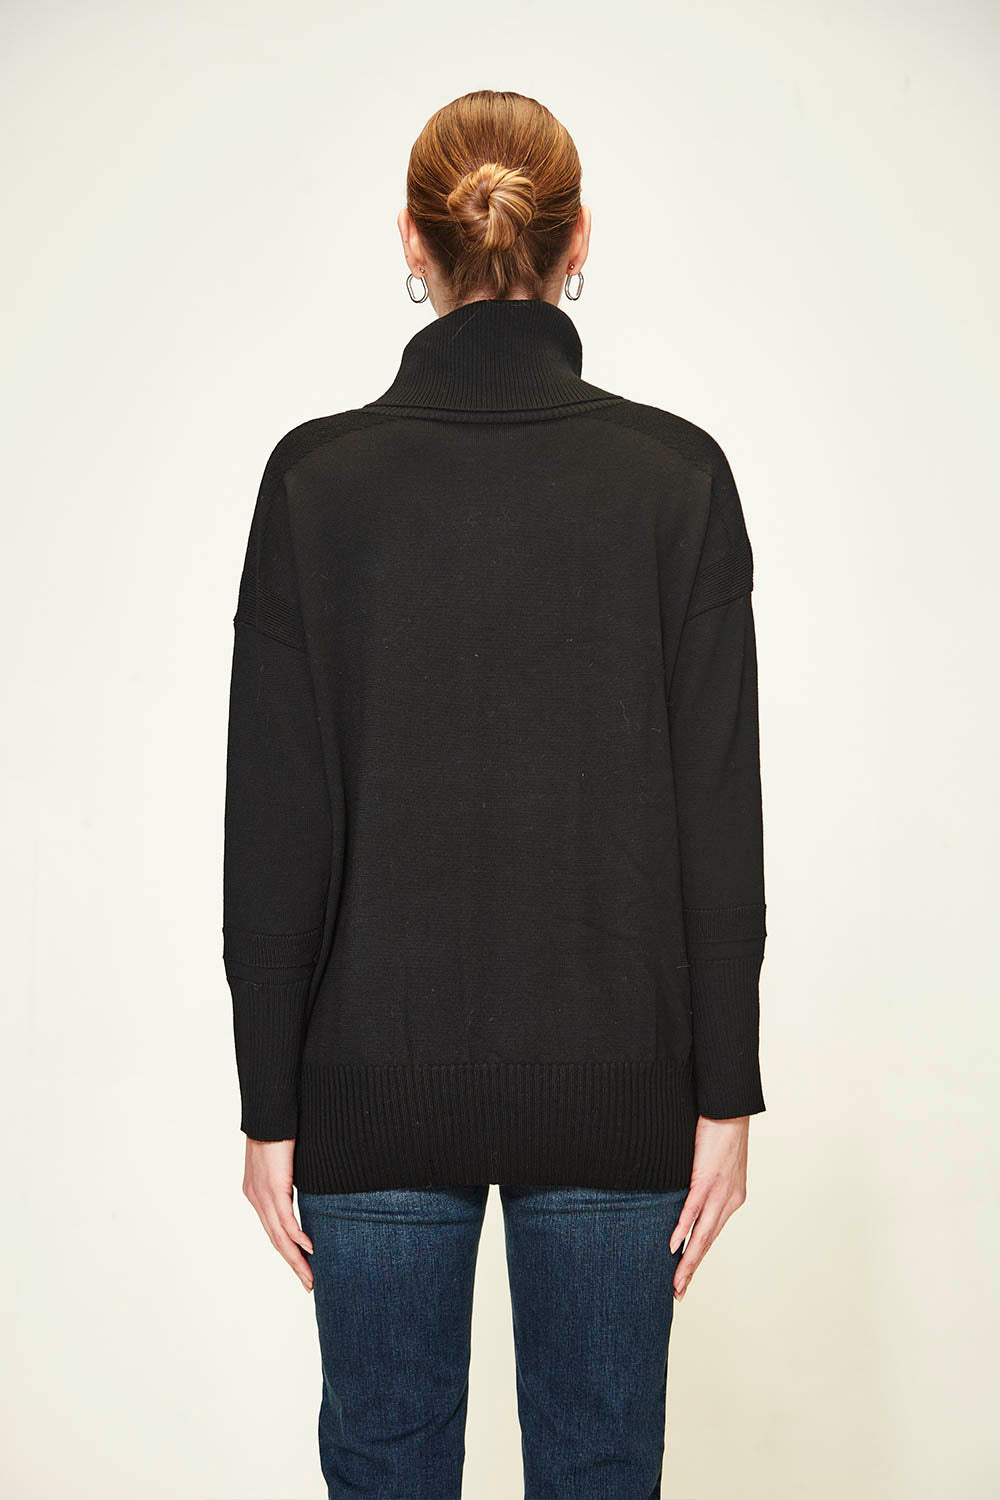 Remi Sweater Black